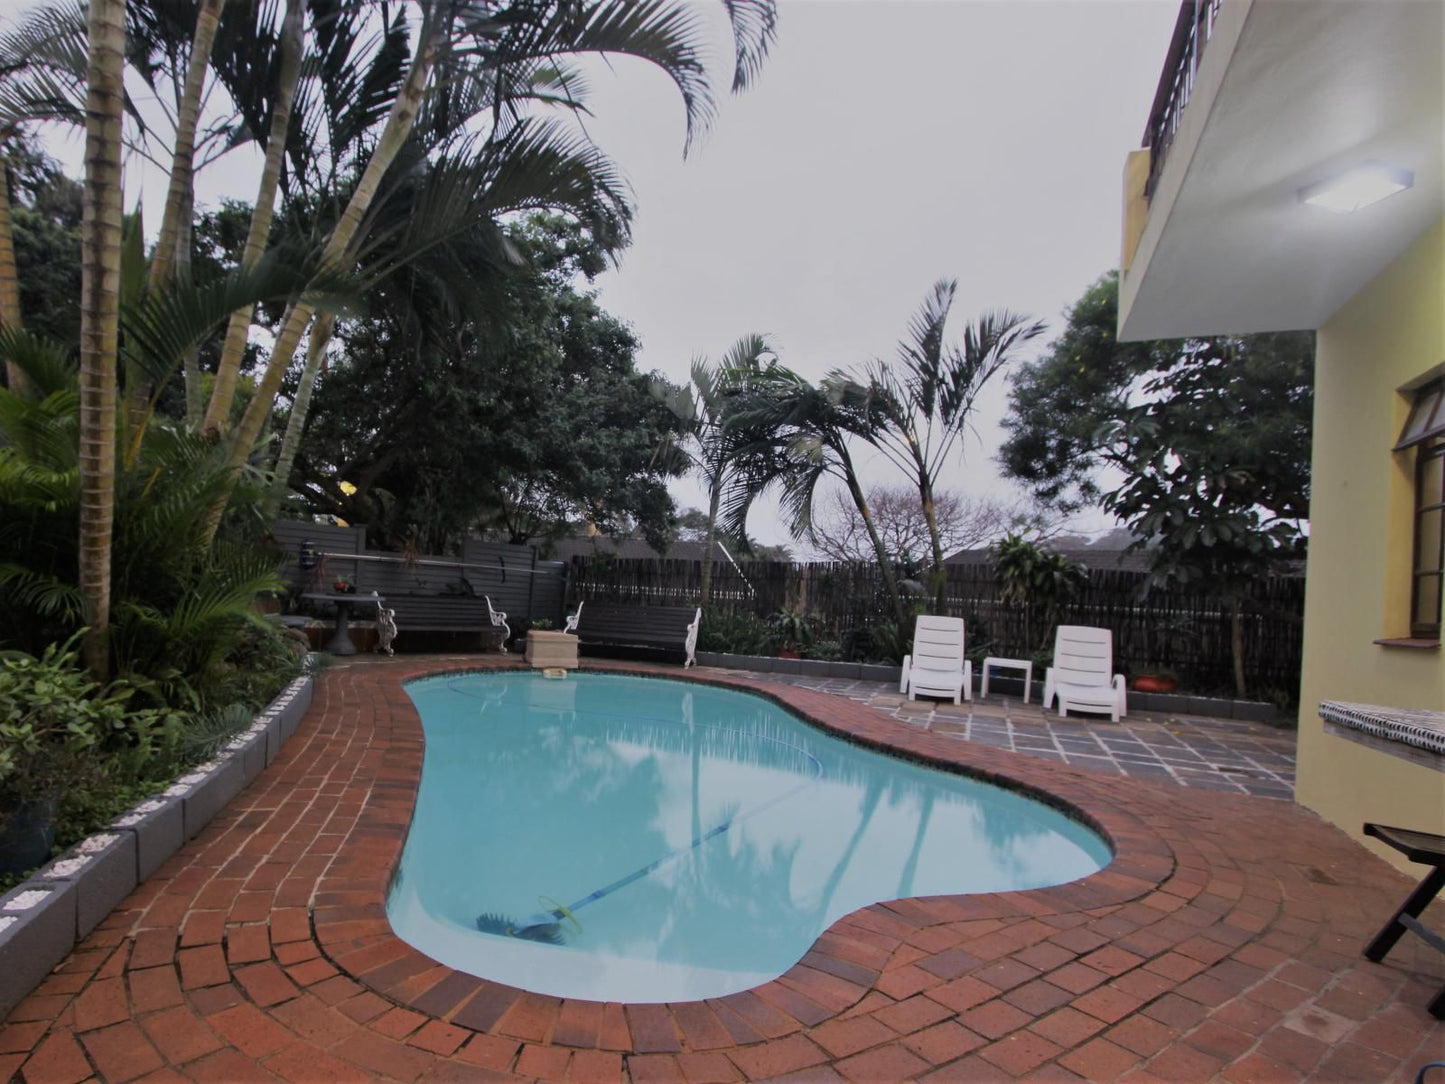 Tuksumduin Guesthouse Ballito Kwazulu Natal South Africa Palm Tree, Plant, Nature, Wood, Swimming Pool